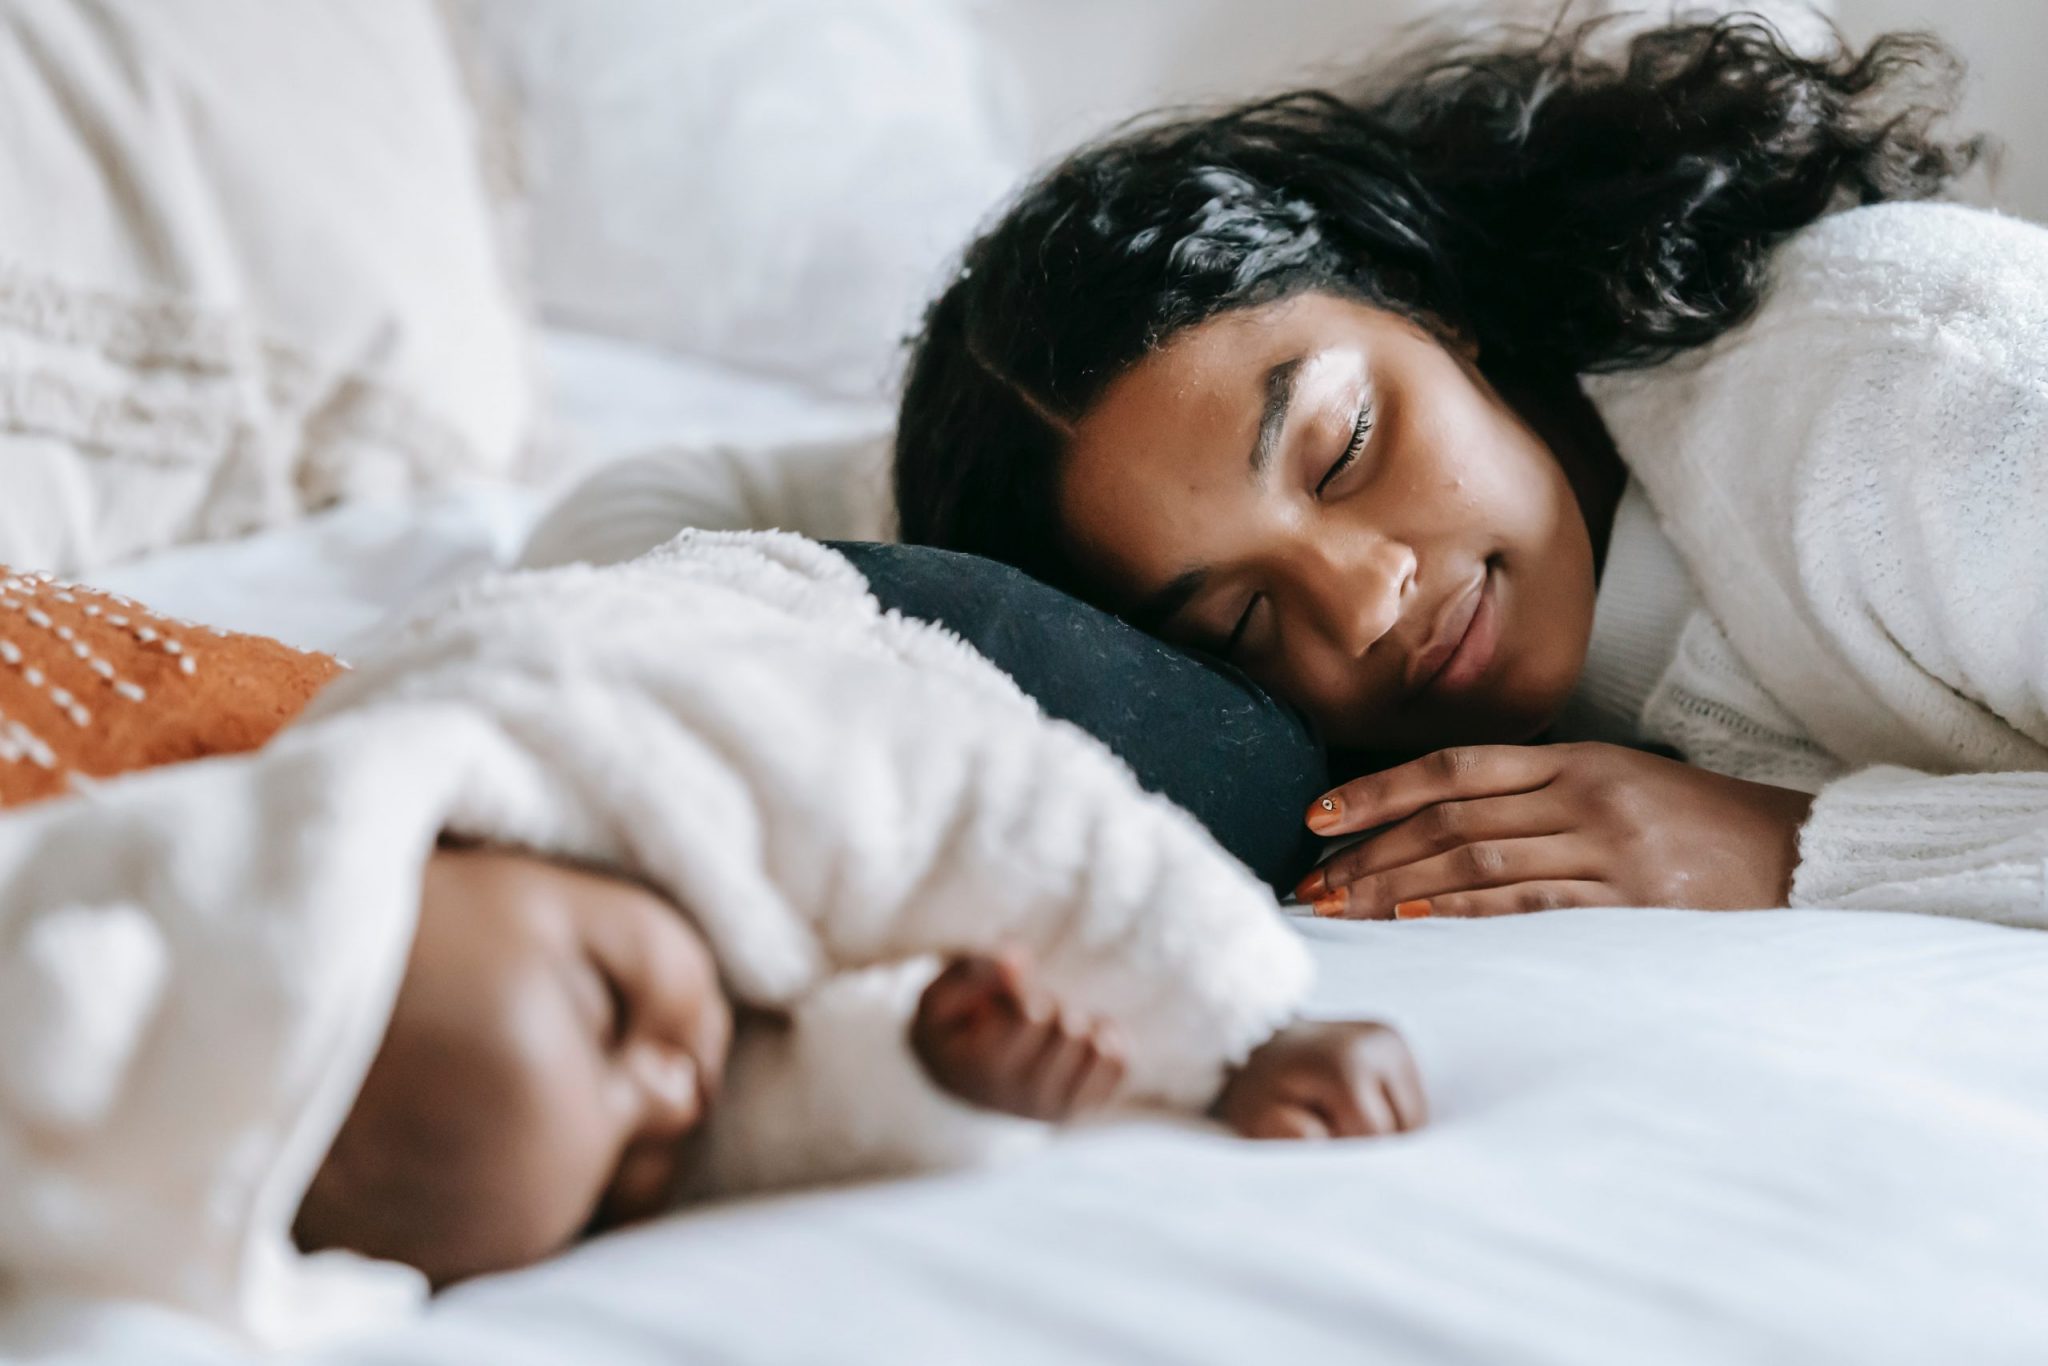 Should I sleep train my baby?